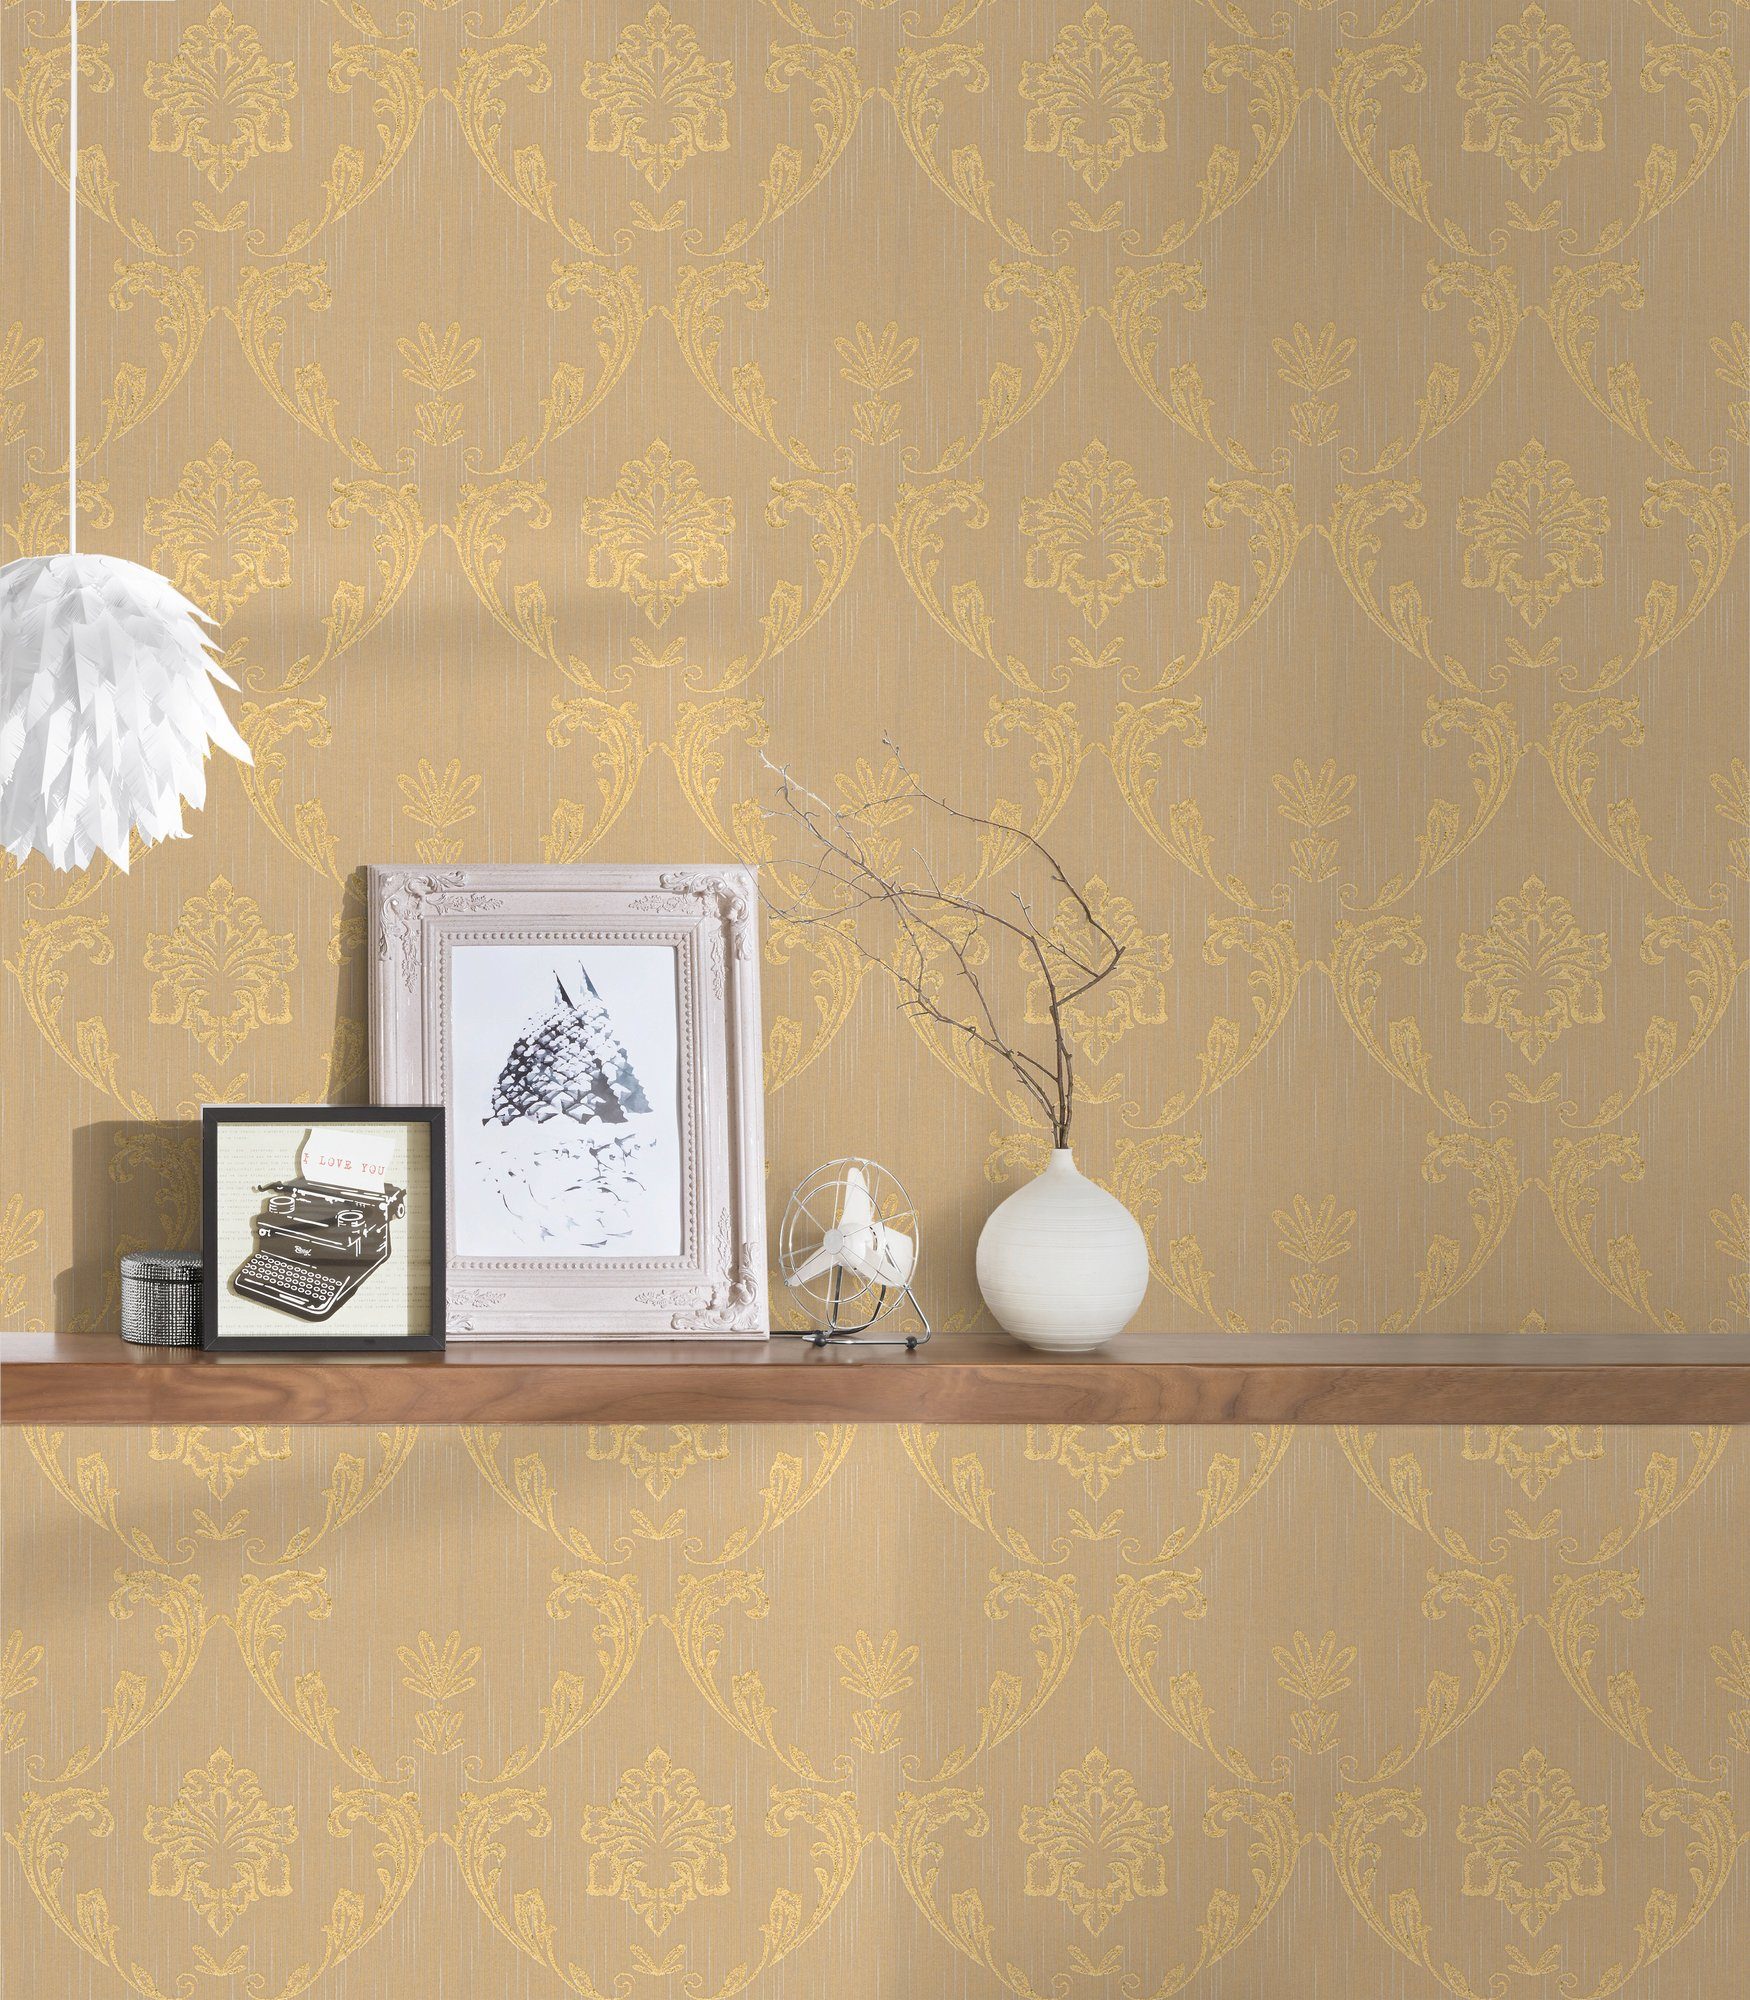 Ornament Barock Paper Textiltapete Barock, Metallic matt, Silk, Architects glänzend, gold/beige samtig, Tapete